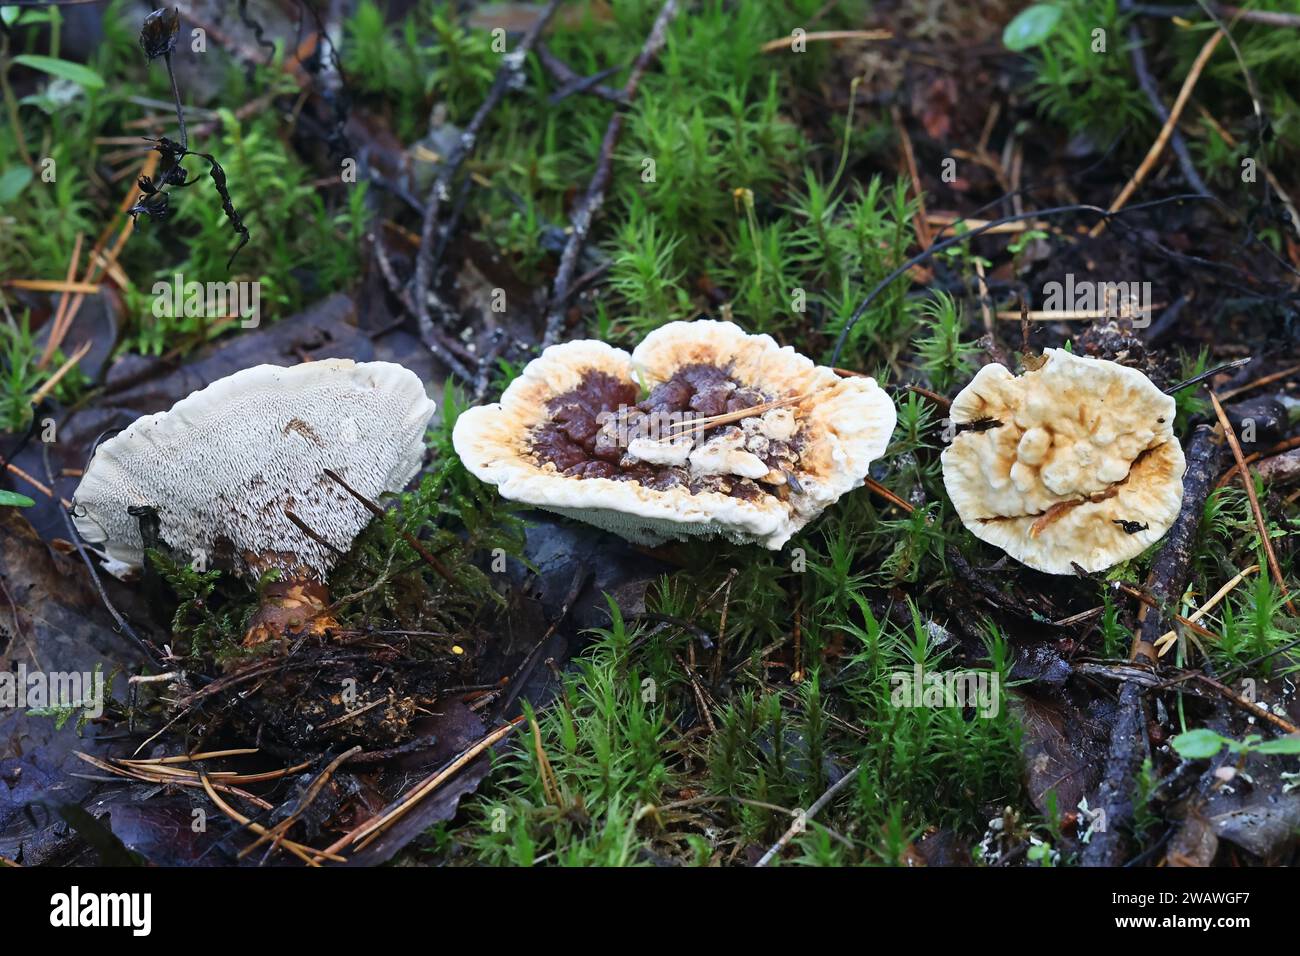 Hydnellum aurantiacum, commonly known as the orange spine or orange Hydnellum, wild tooth fungus from Finland Stock Photo